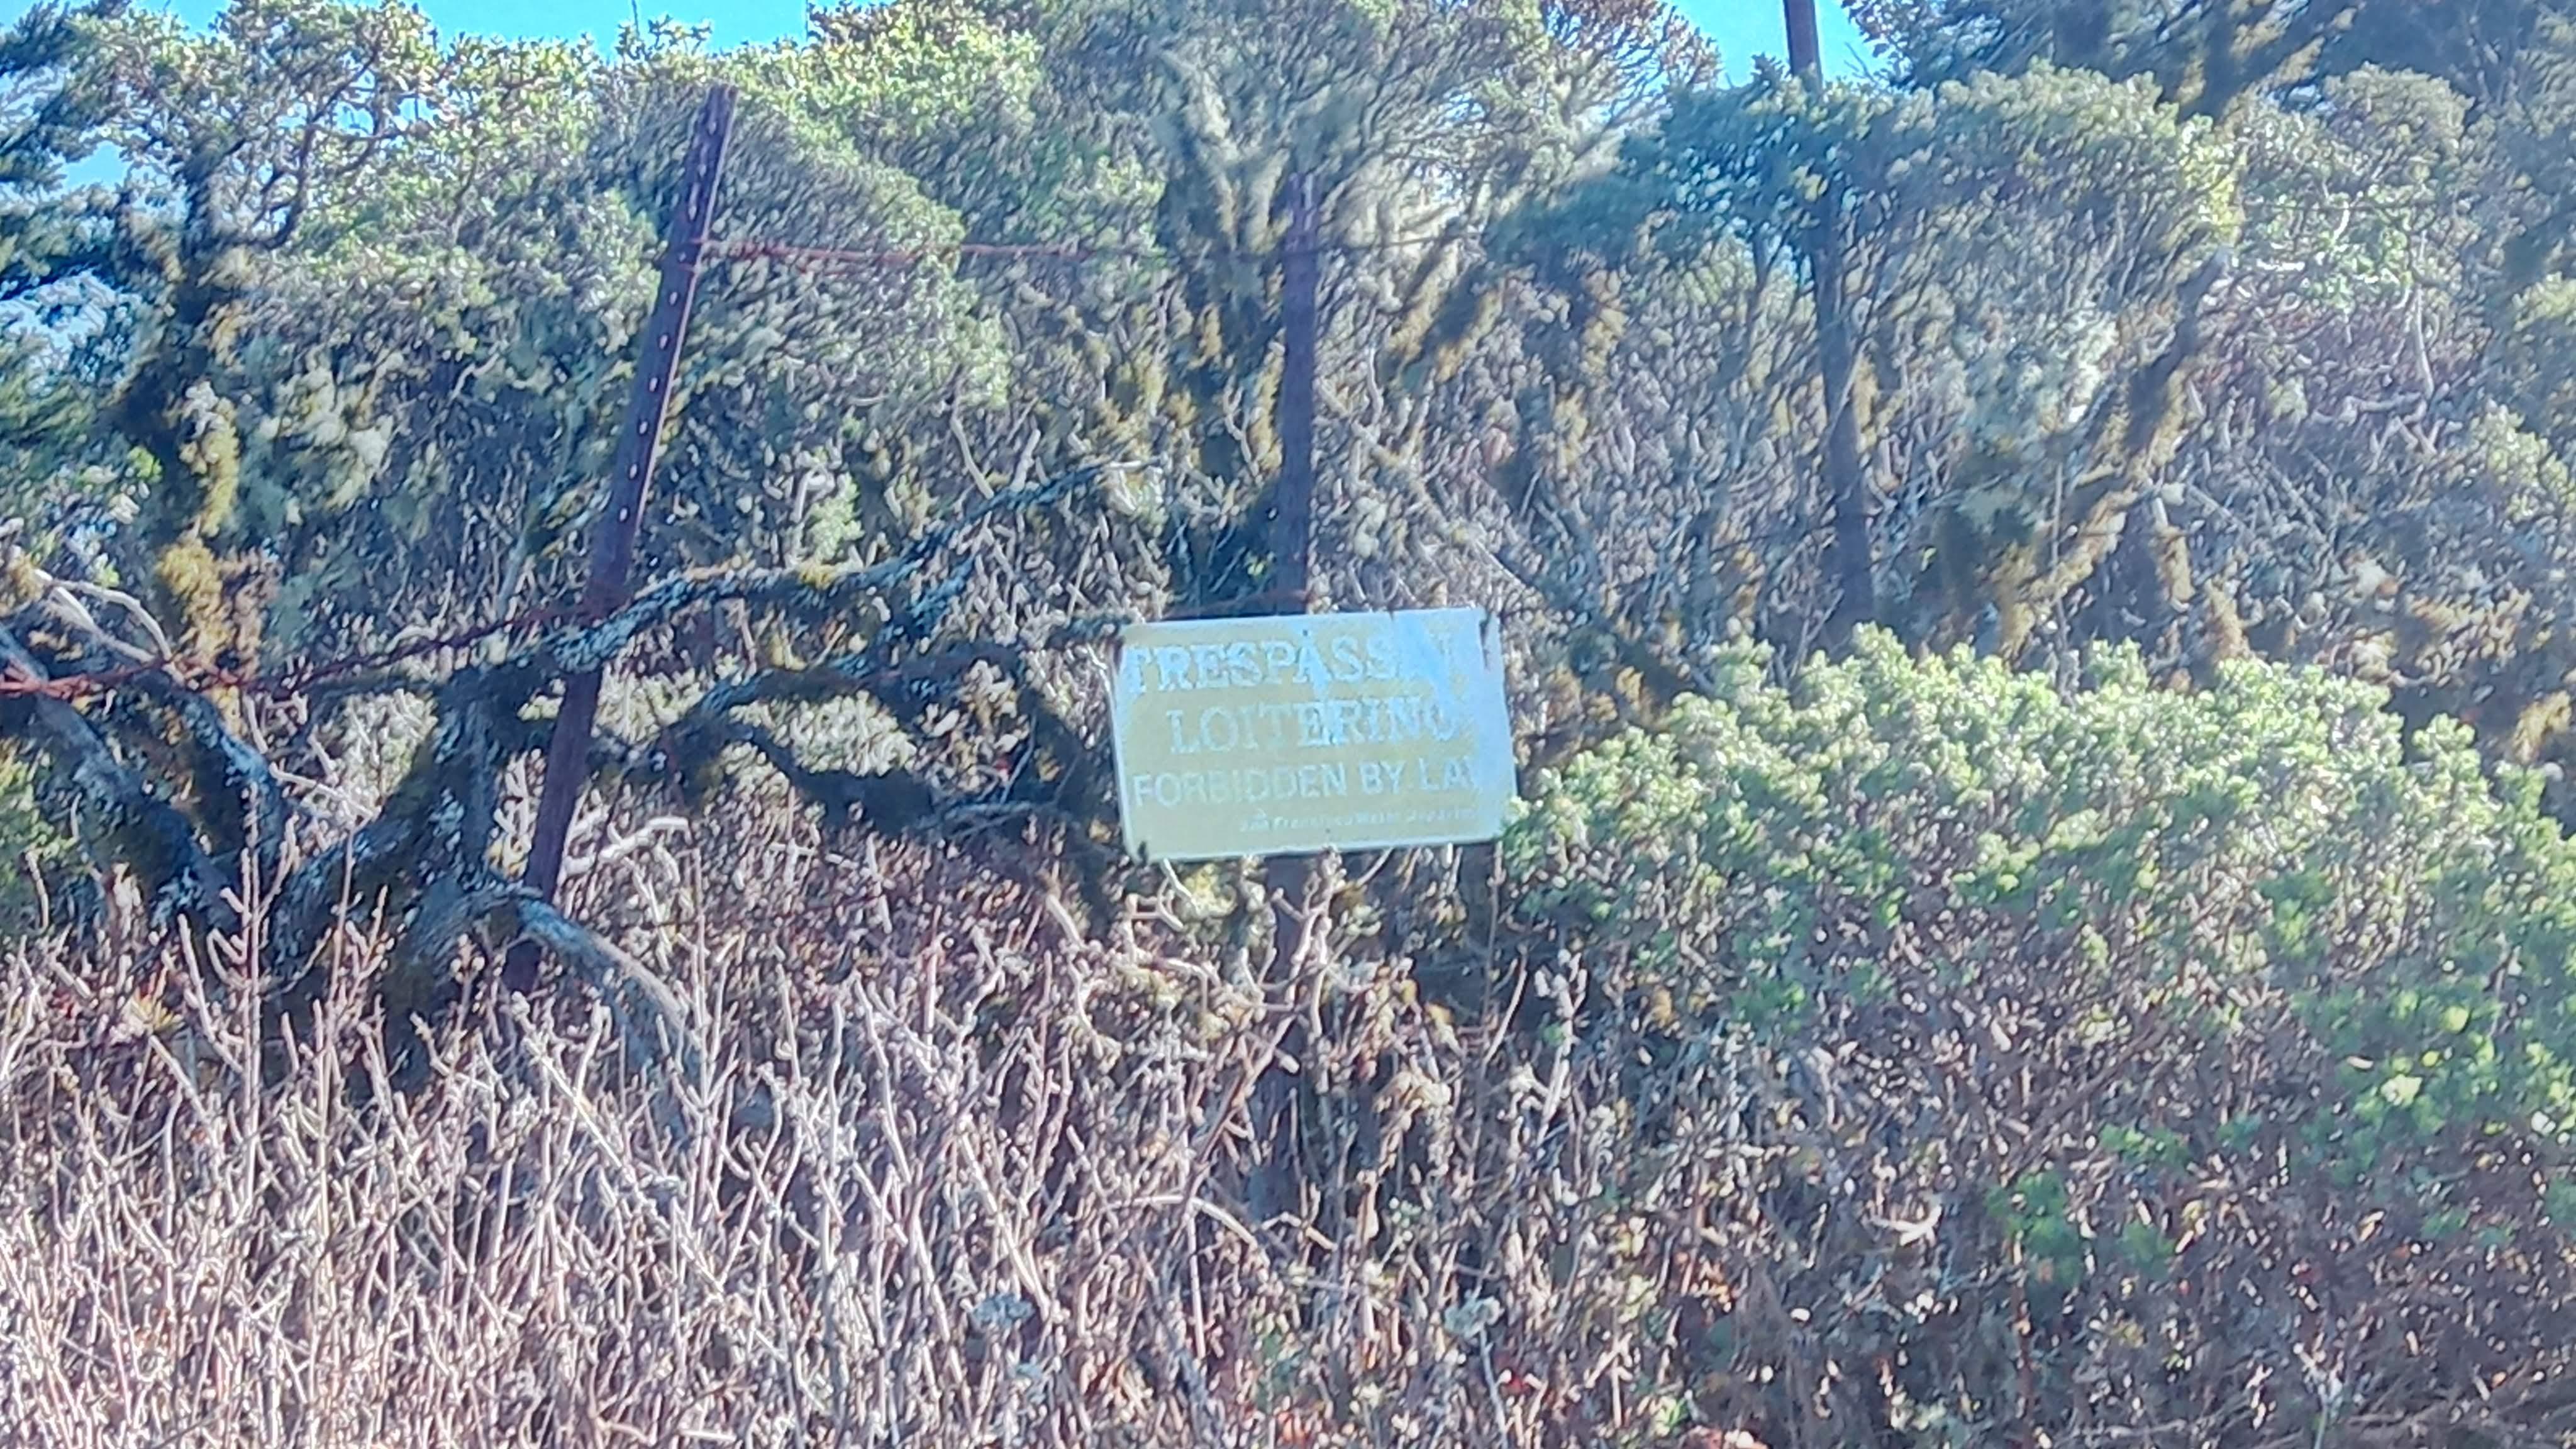 San Francisco watershed - no trespassing allowed